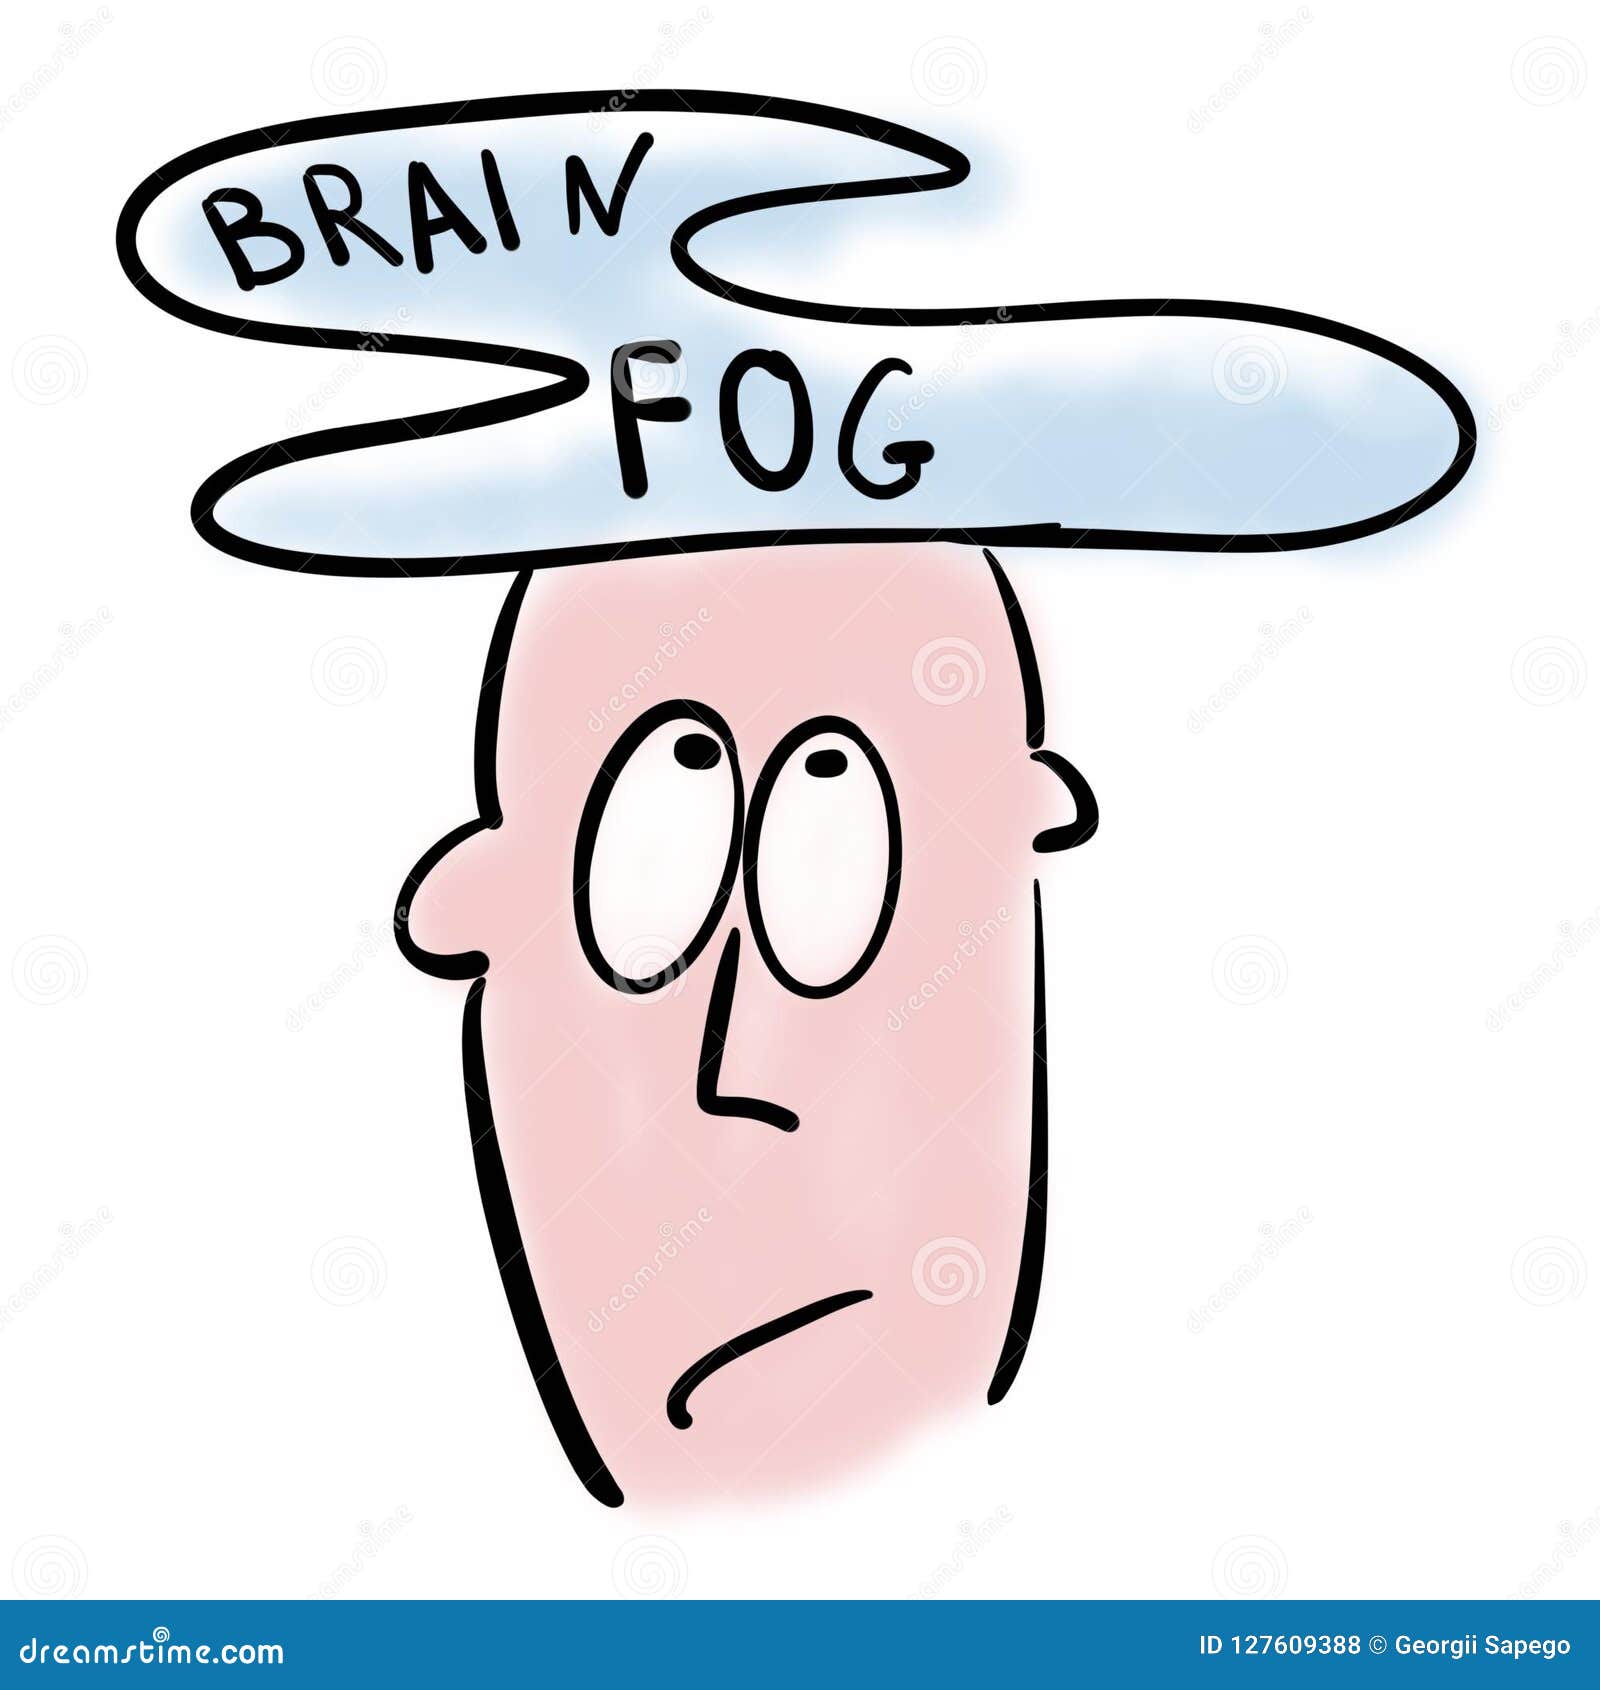 Man has a brain fog stock illustration. Illustration of head - 127609388